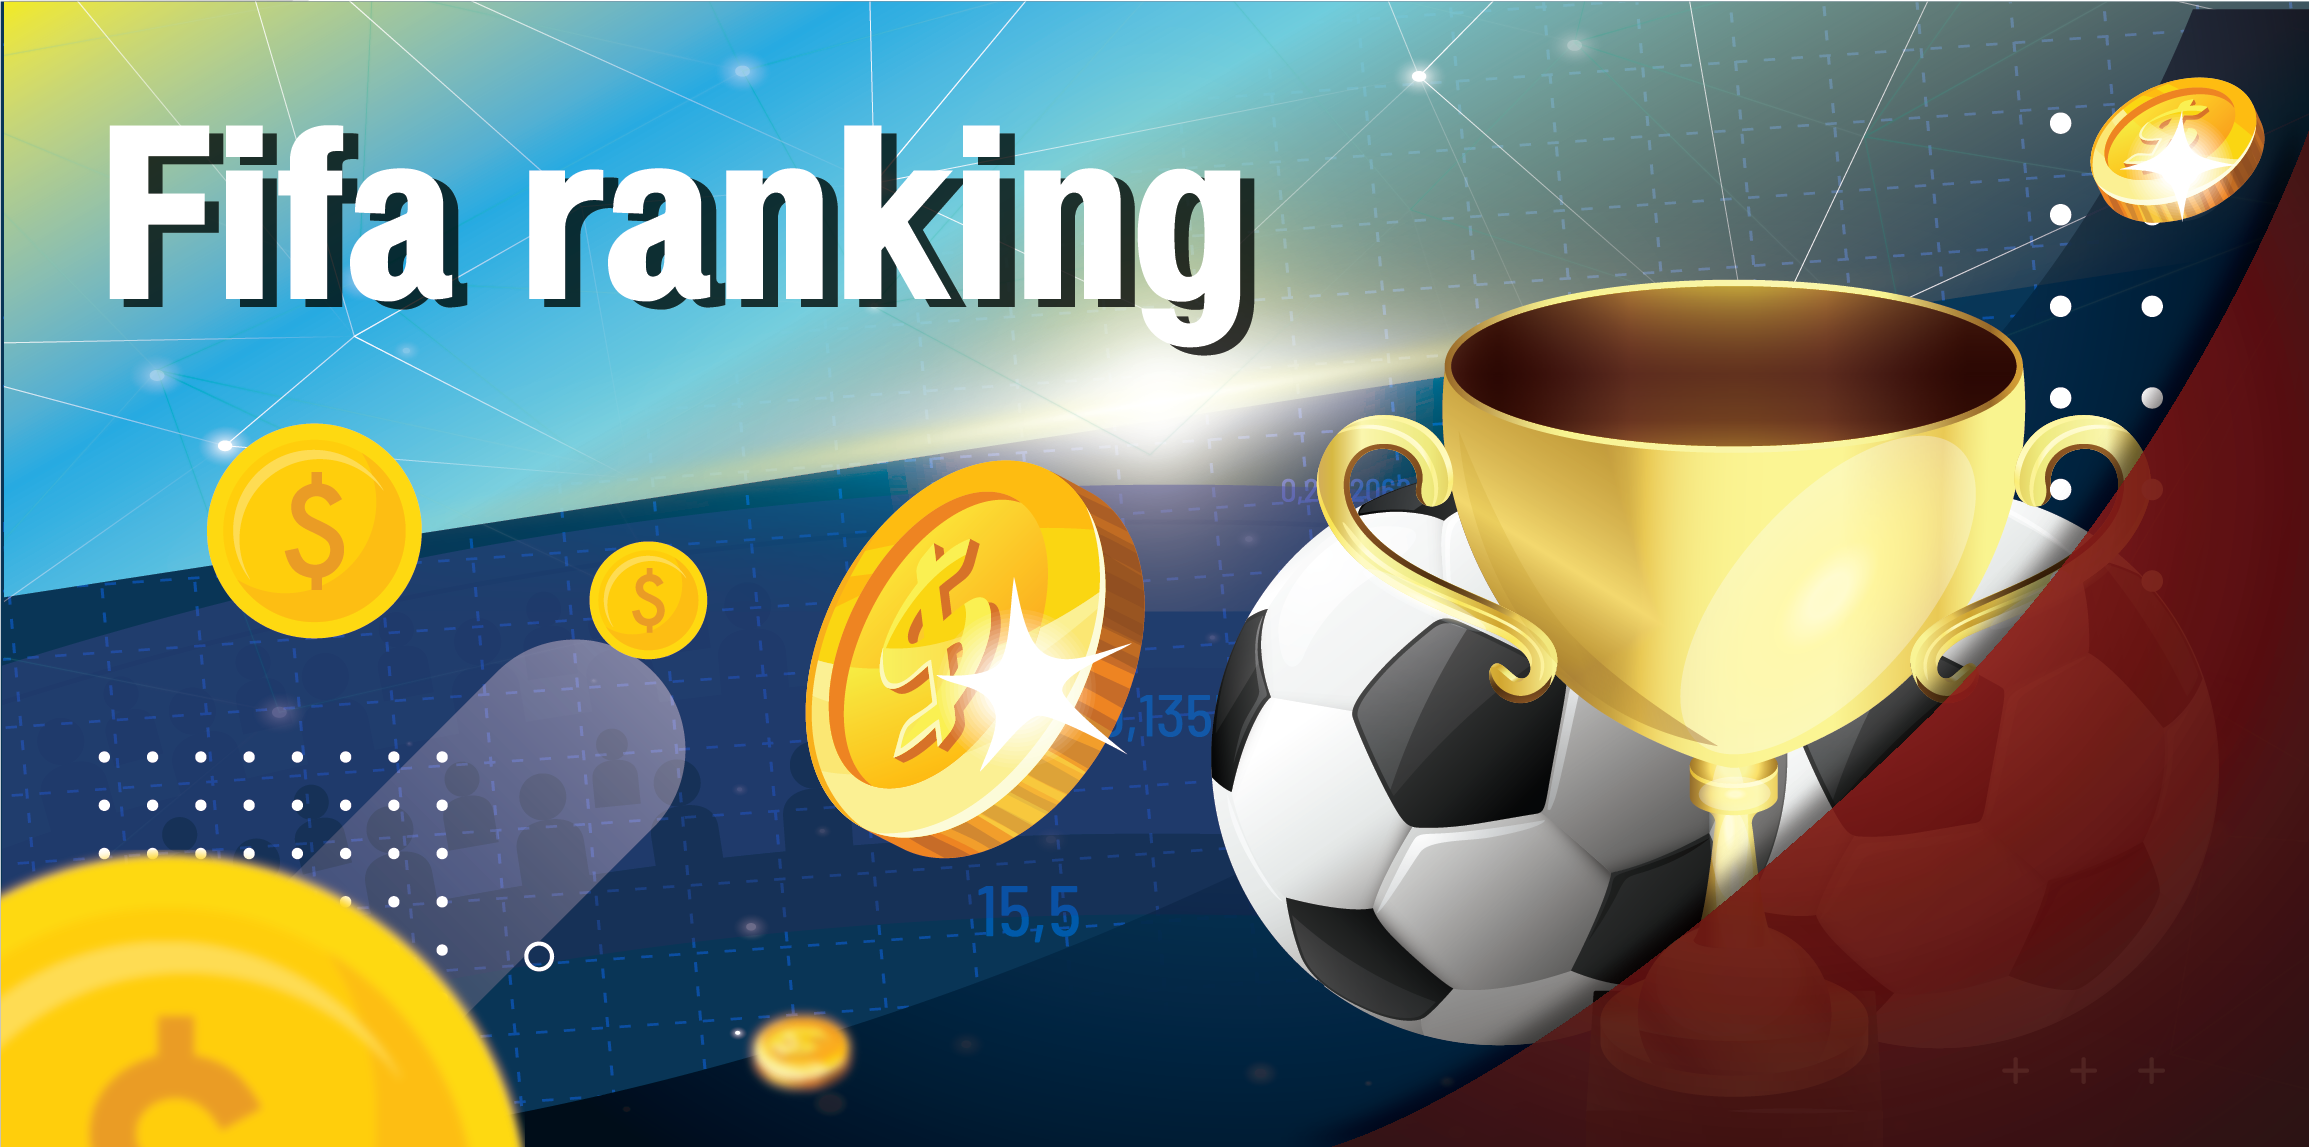 fifa ranking - onlinecasinodude